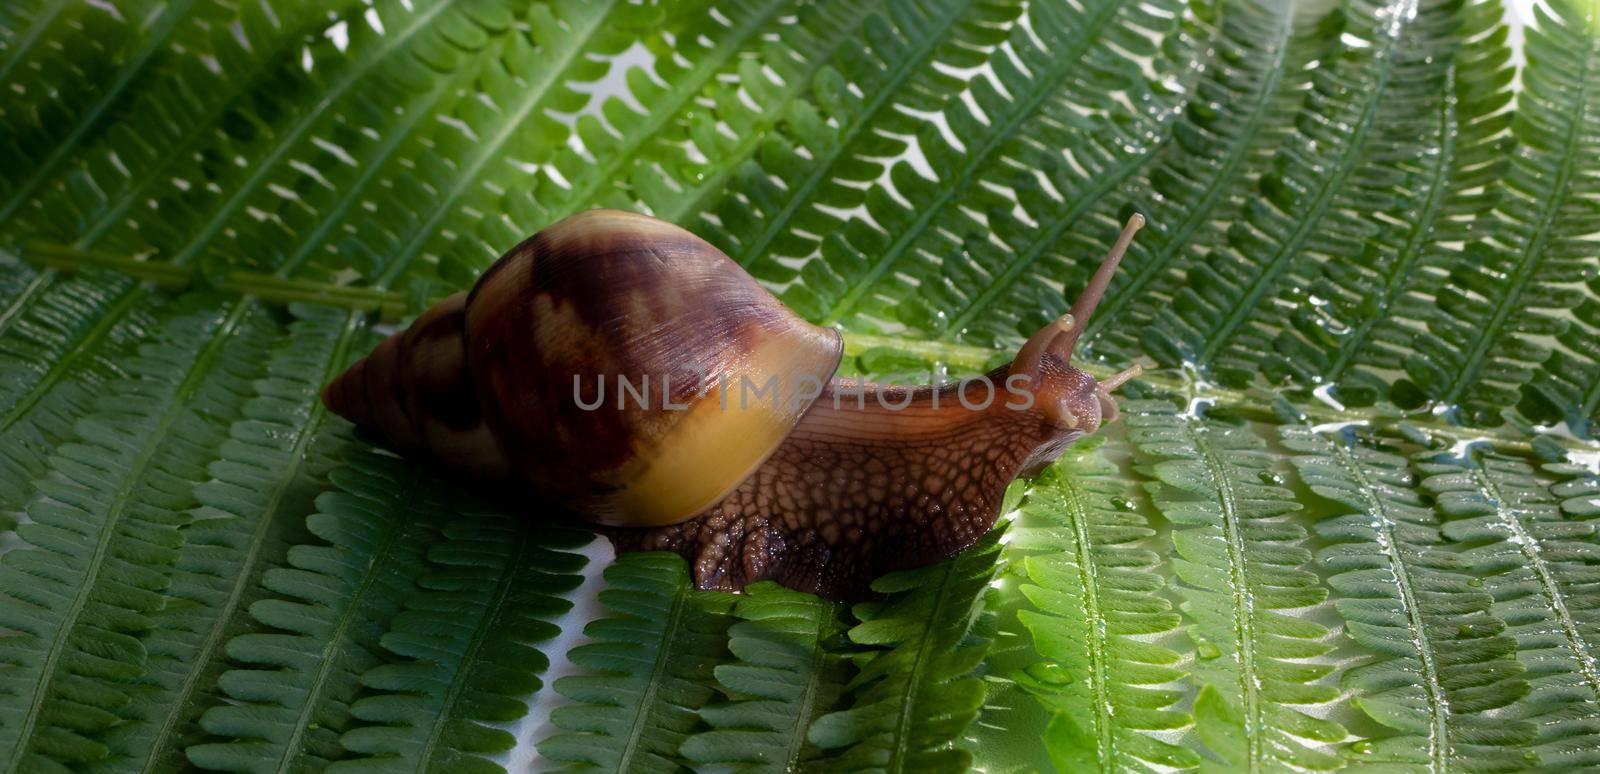 Achatina fulica, a giant snail crawling on a green fern leaf by lapushka62